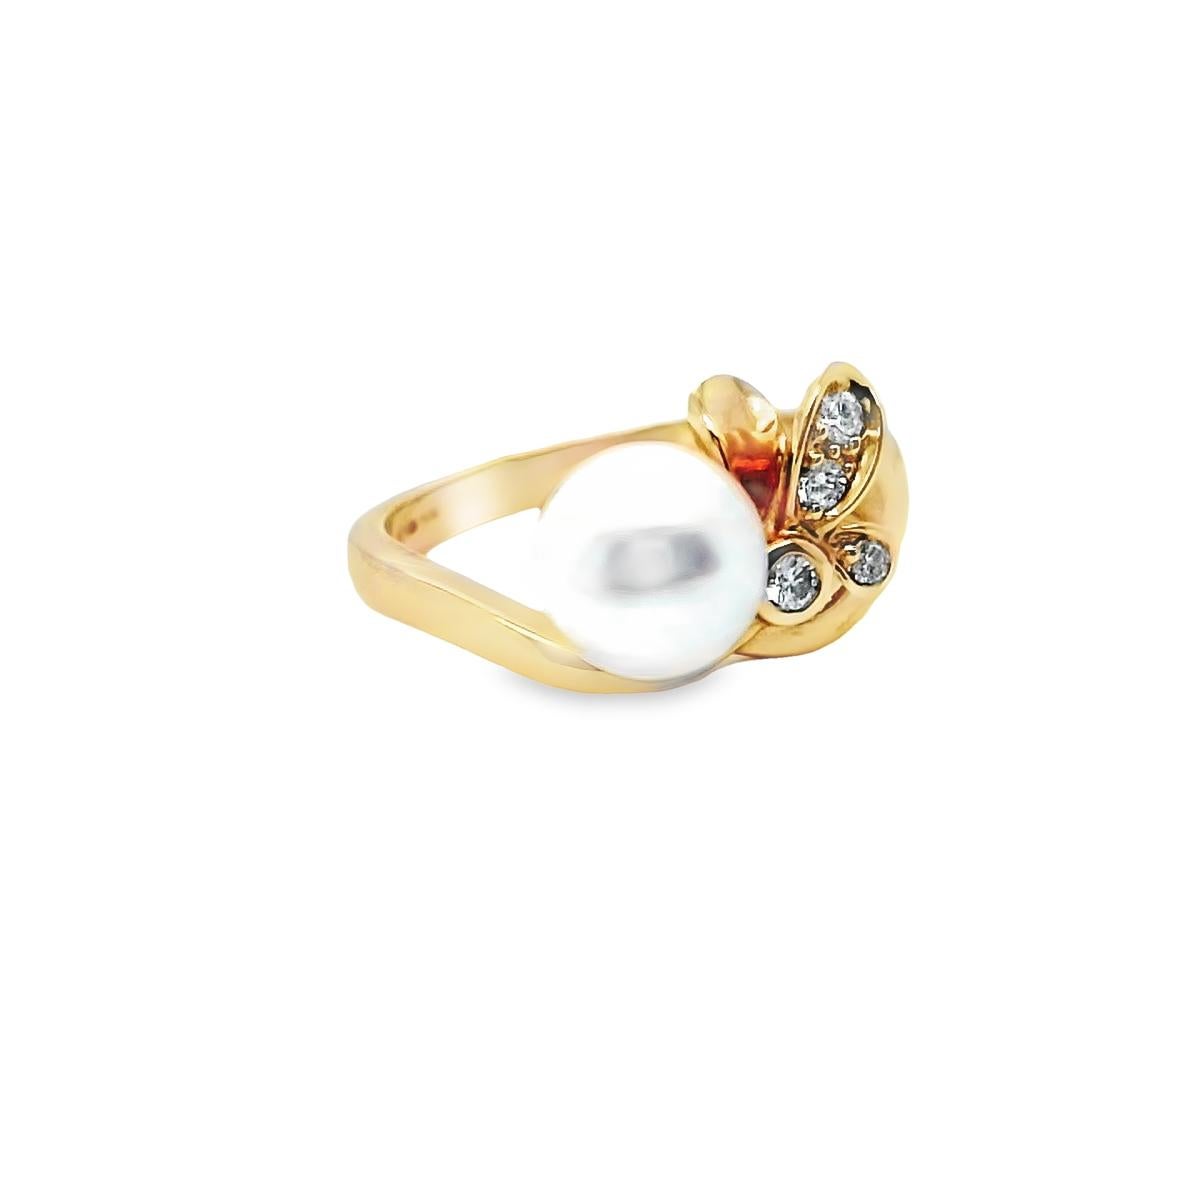 Mikimoto rose gold Pearl & Diamond ring PRH5473Z2 In Excellent Condition For Sale In Addlestone, GB